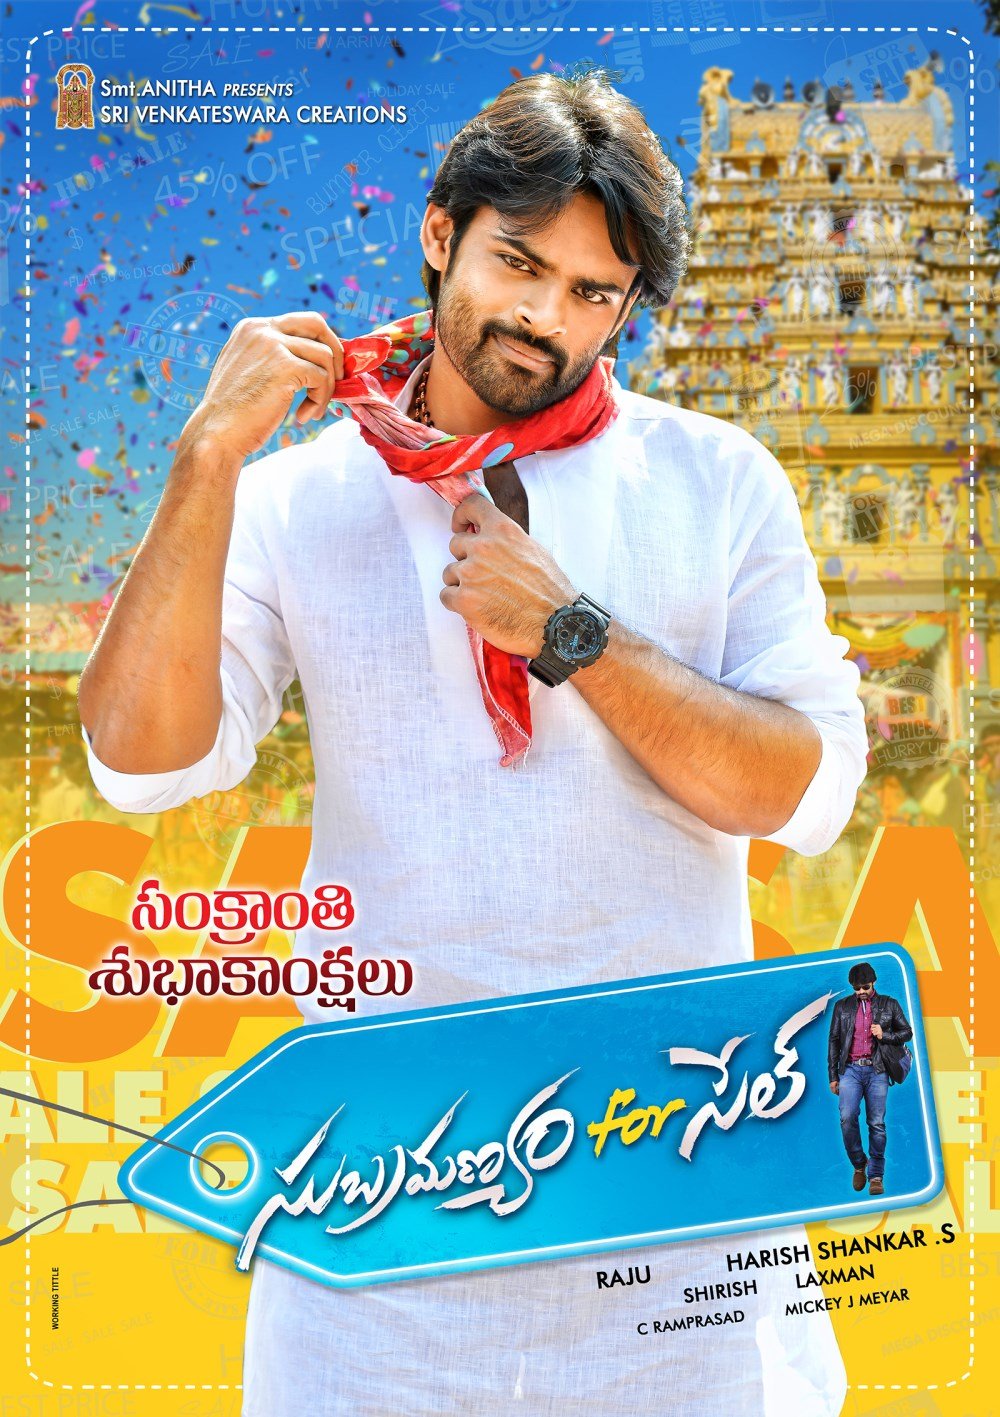 Telugu poster of the movie Subramanyam For Sale